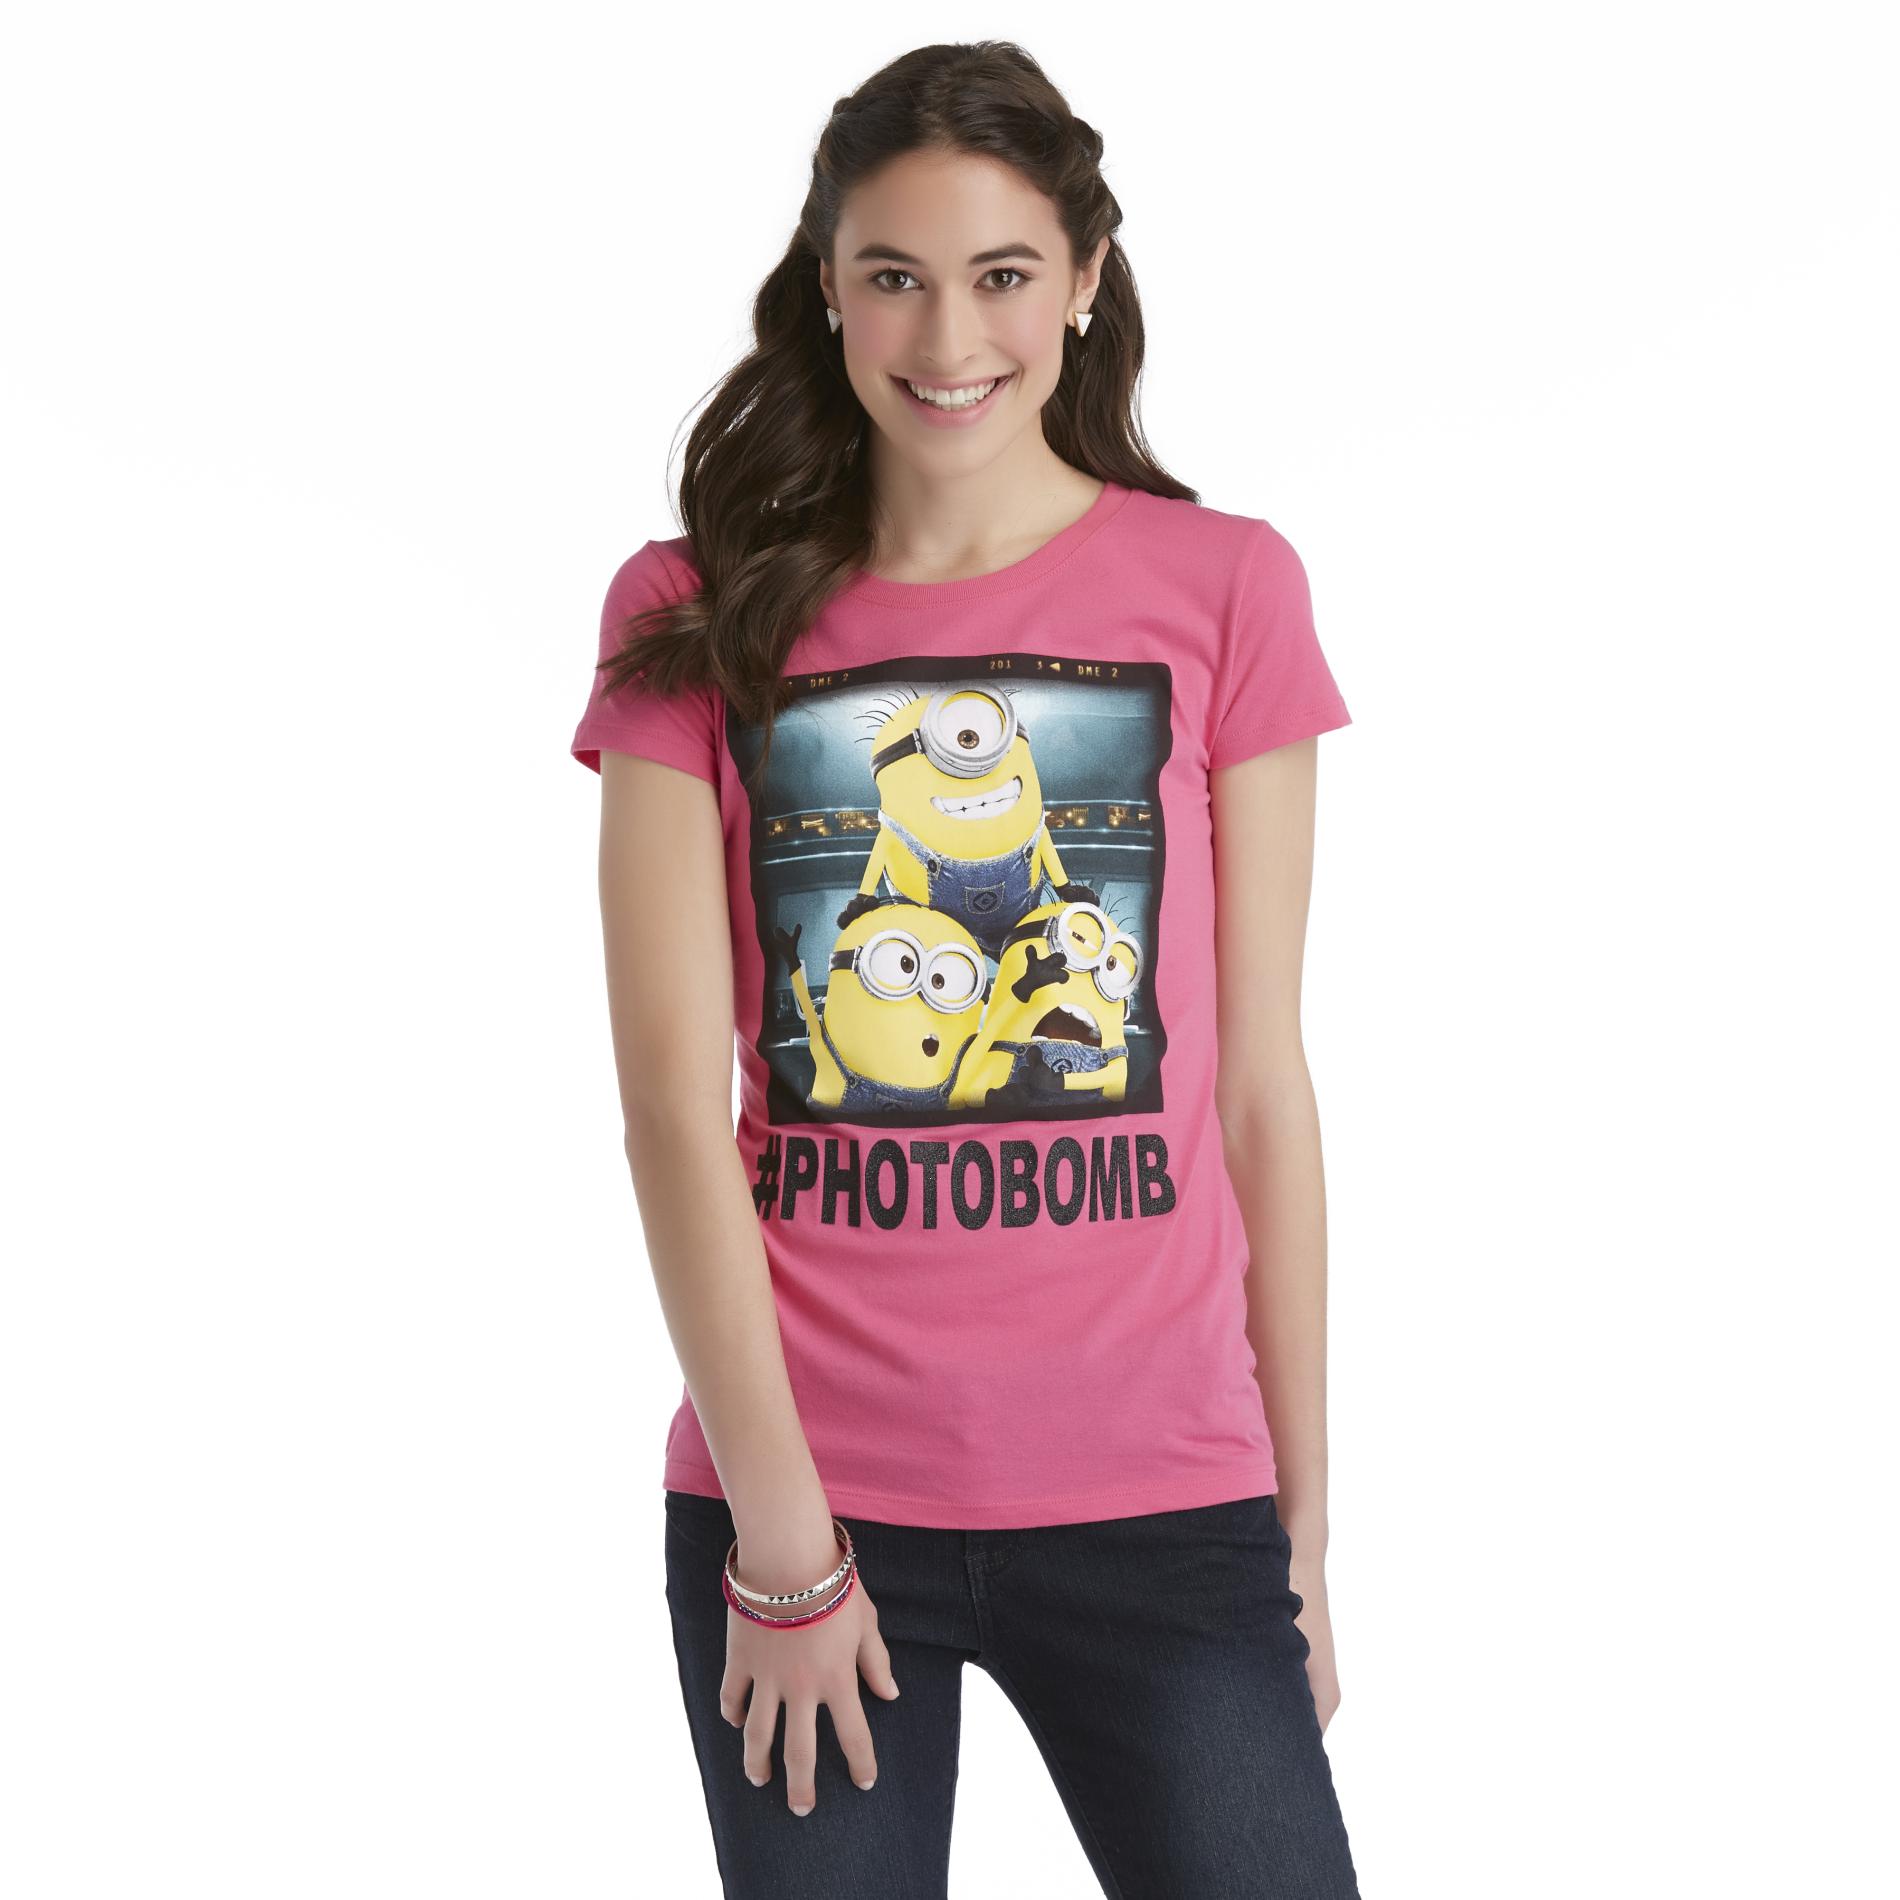 Illumination Entertainment Junior's Graphic T-Shirt - #Photobomb